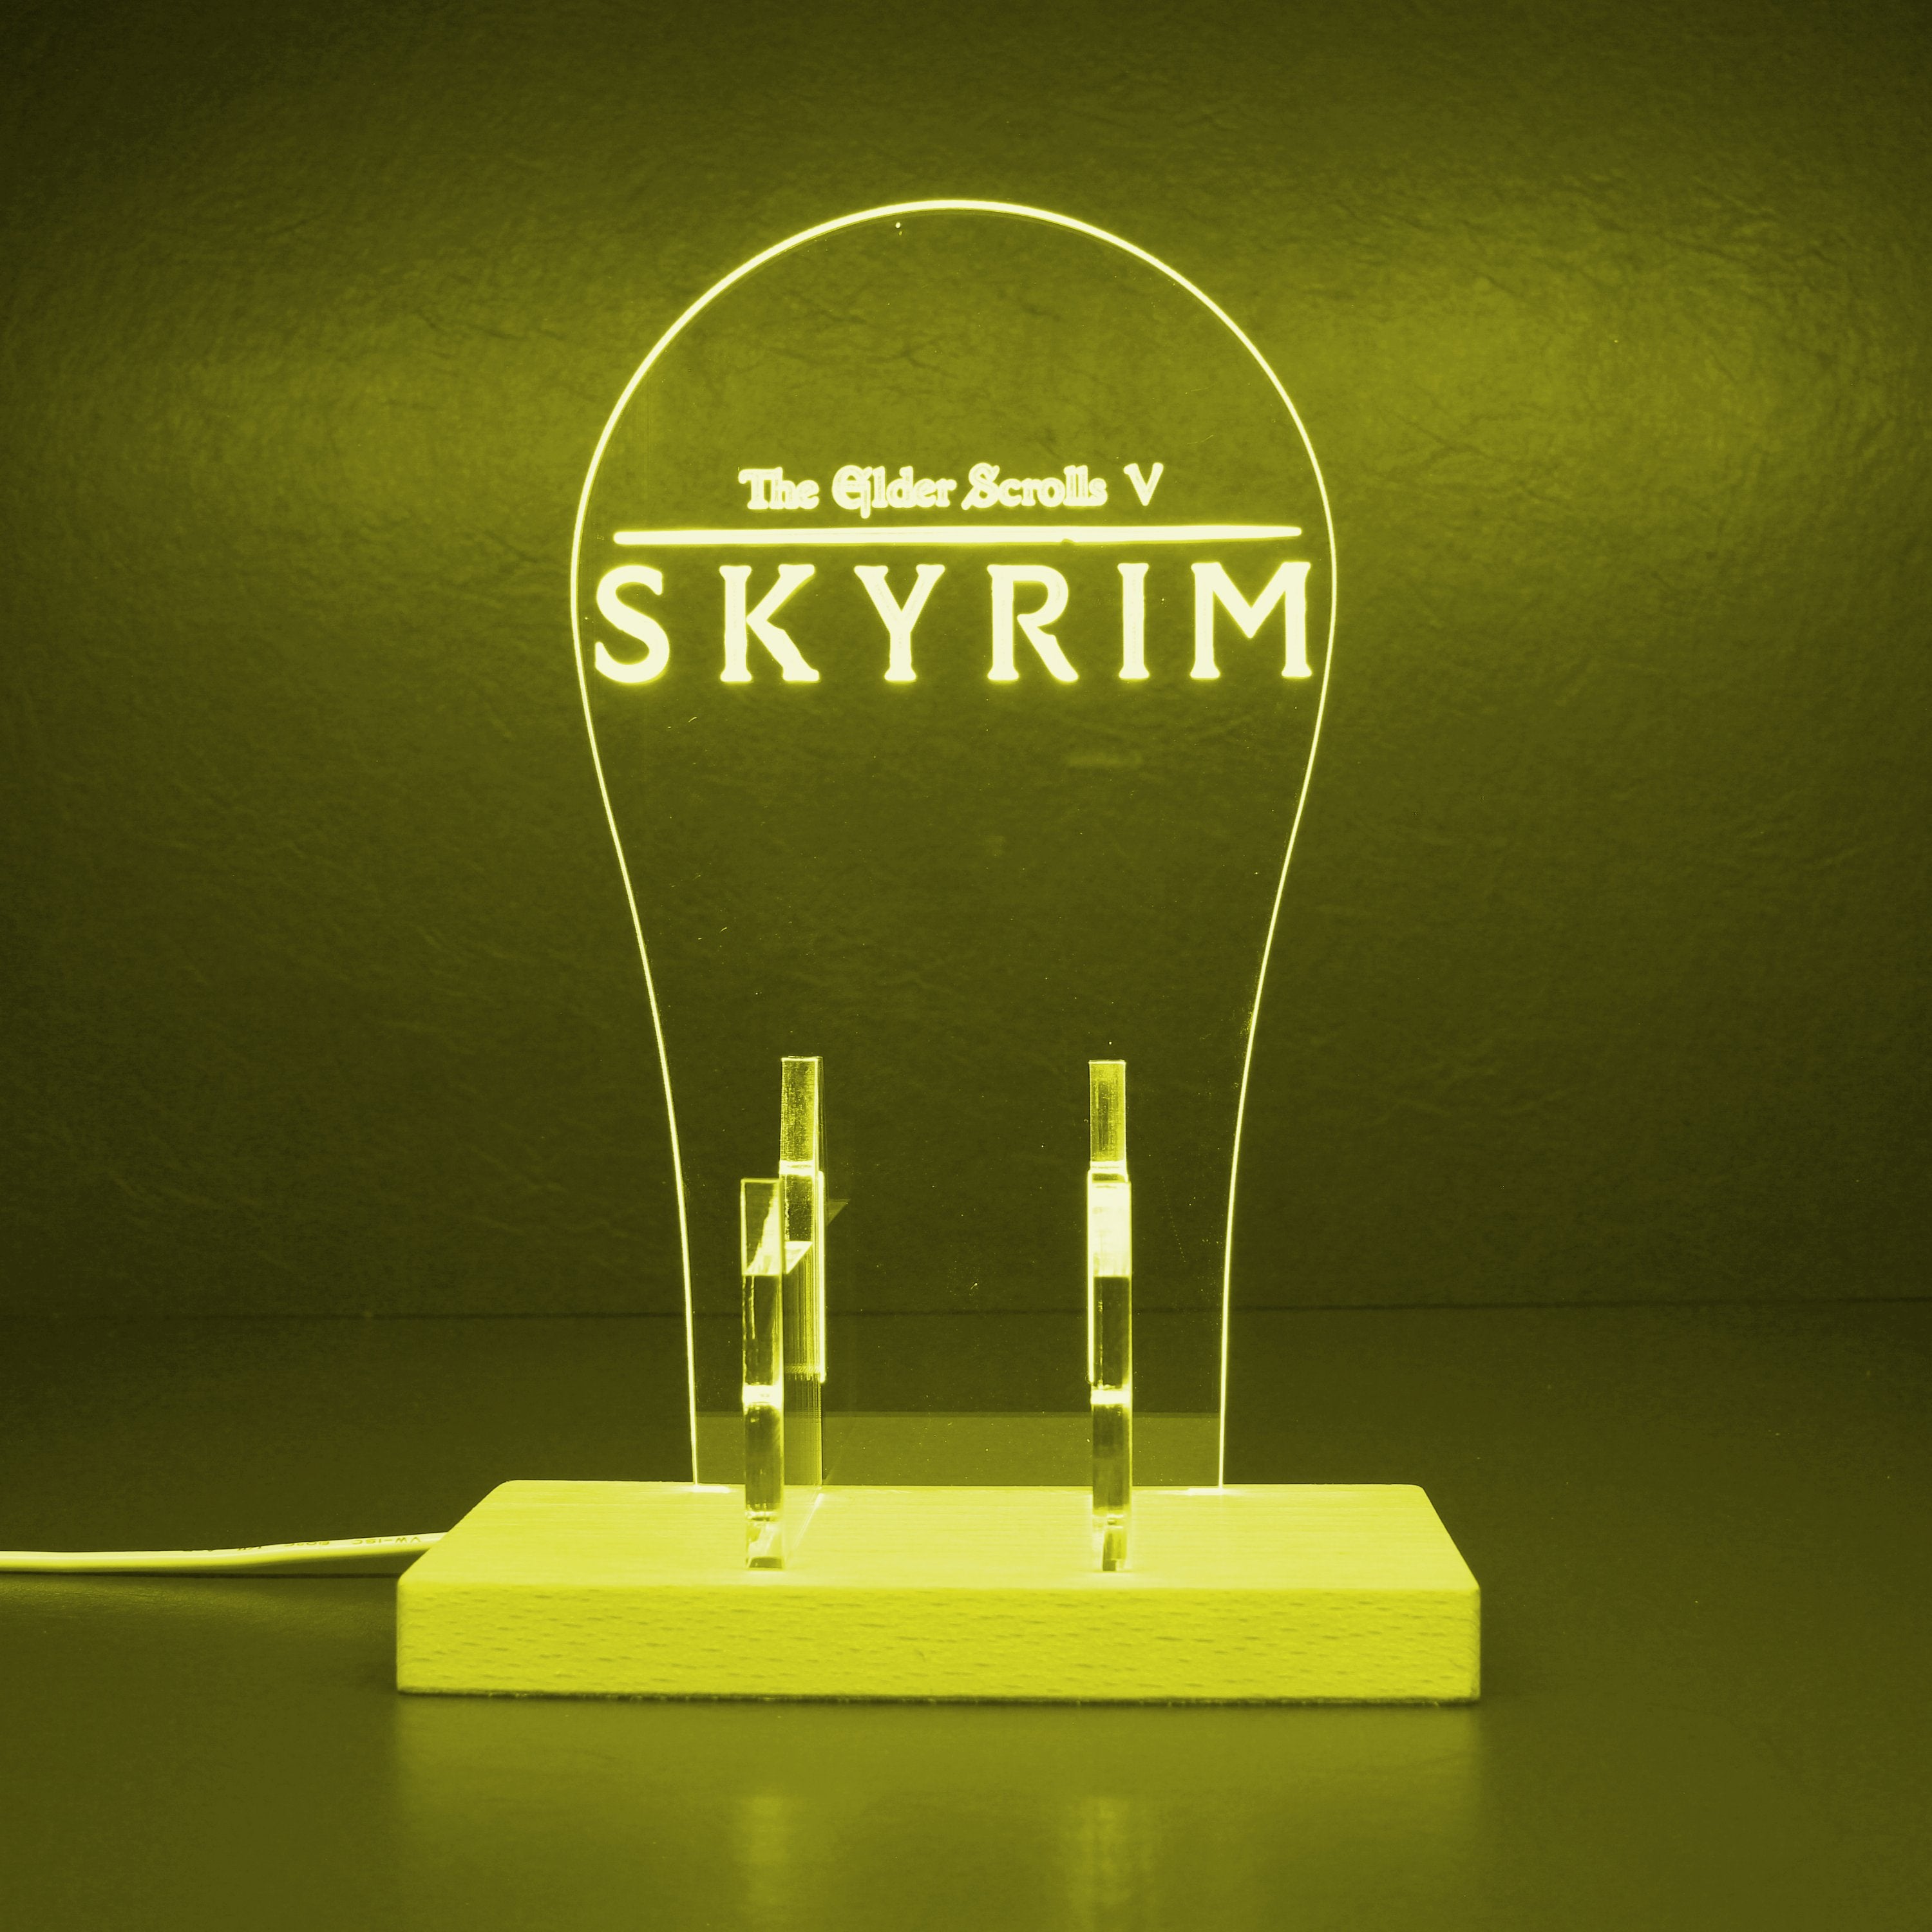 Elder Scrolls Skyrim RGB LED Gaming Headset Controller Stand